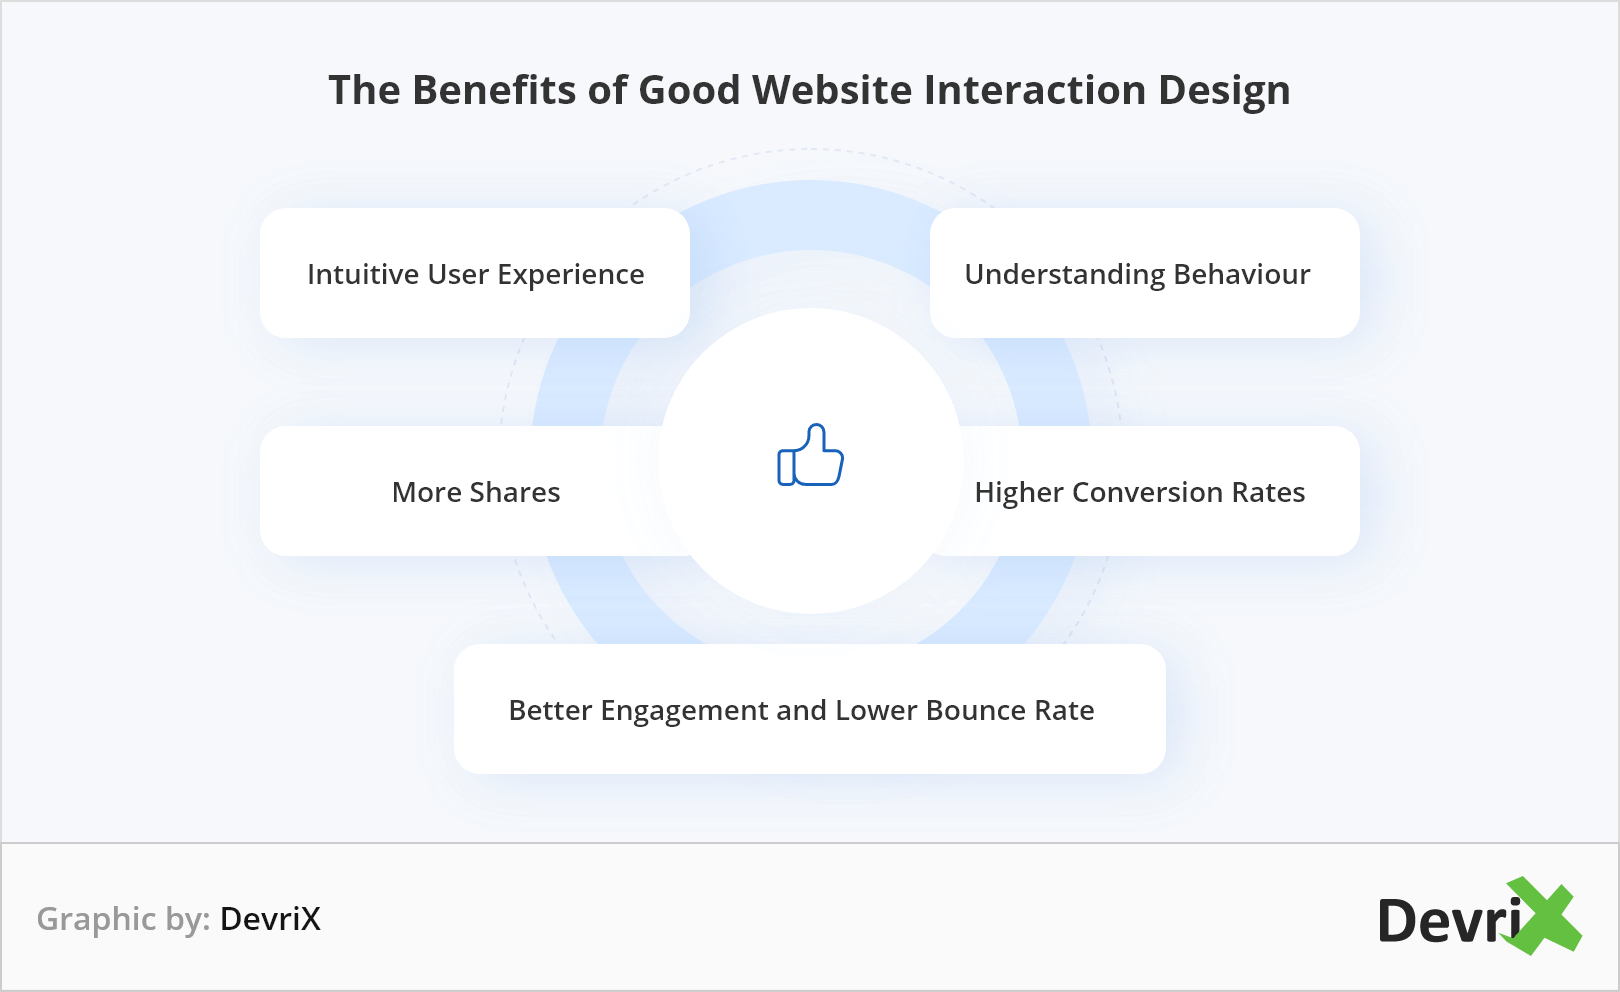 The benefits of good website interaction design